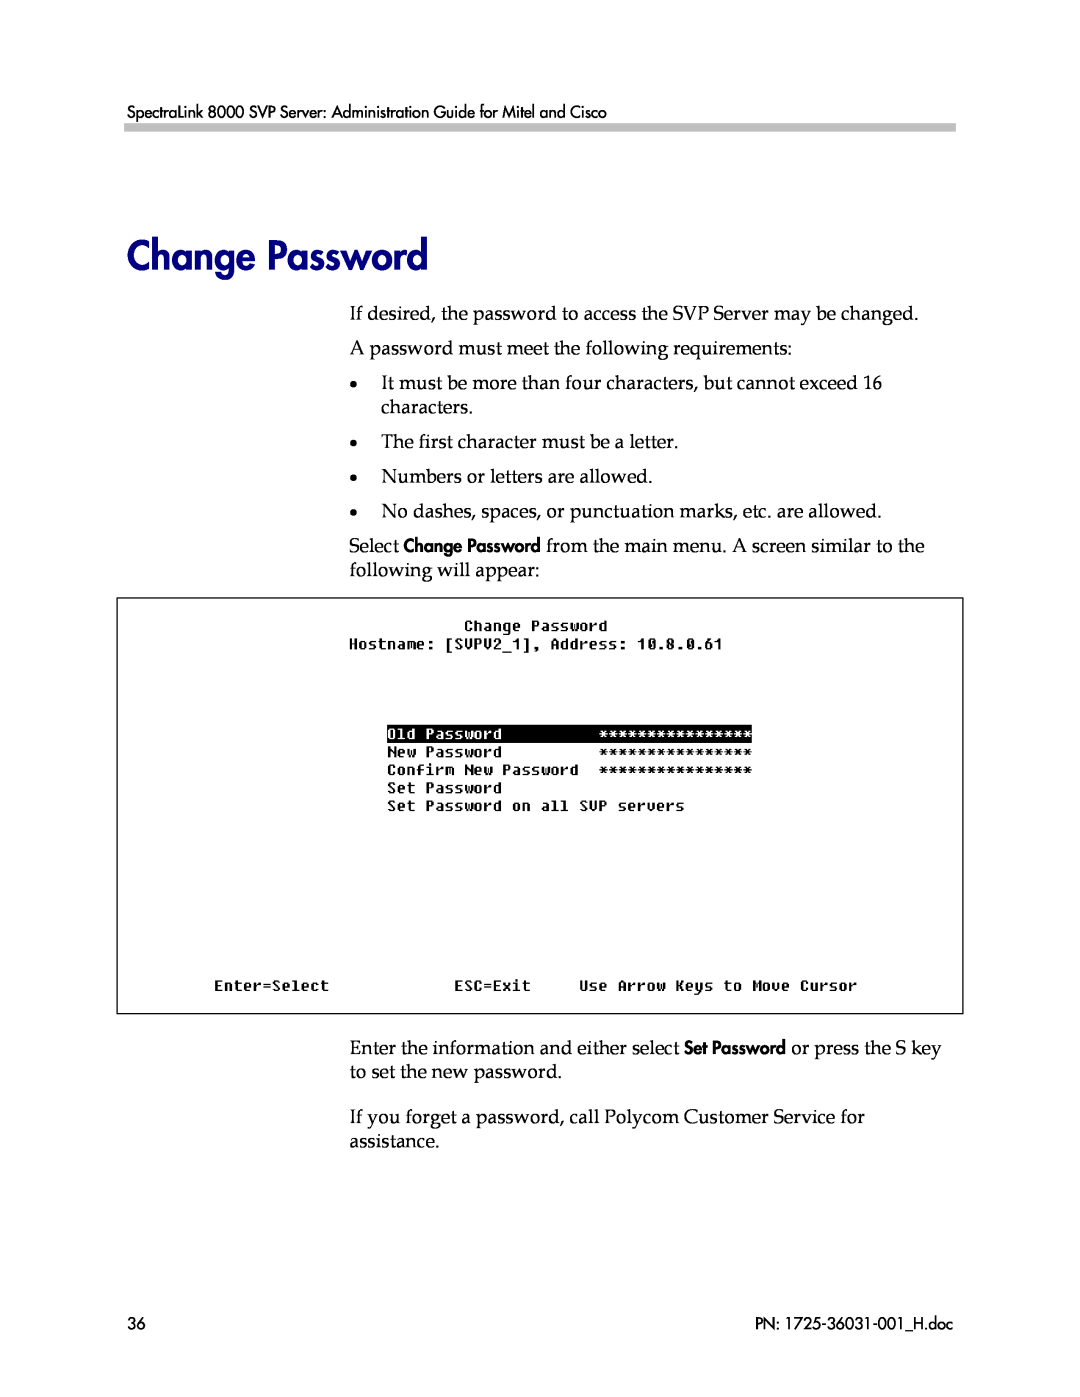 Polycom VP010, 1725-36031-001 manual Change Password 